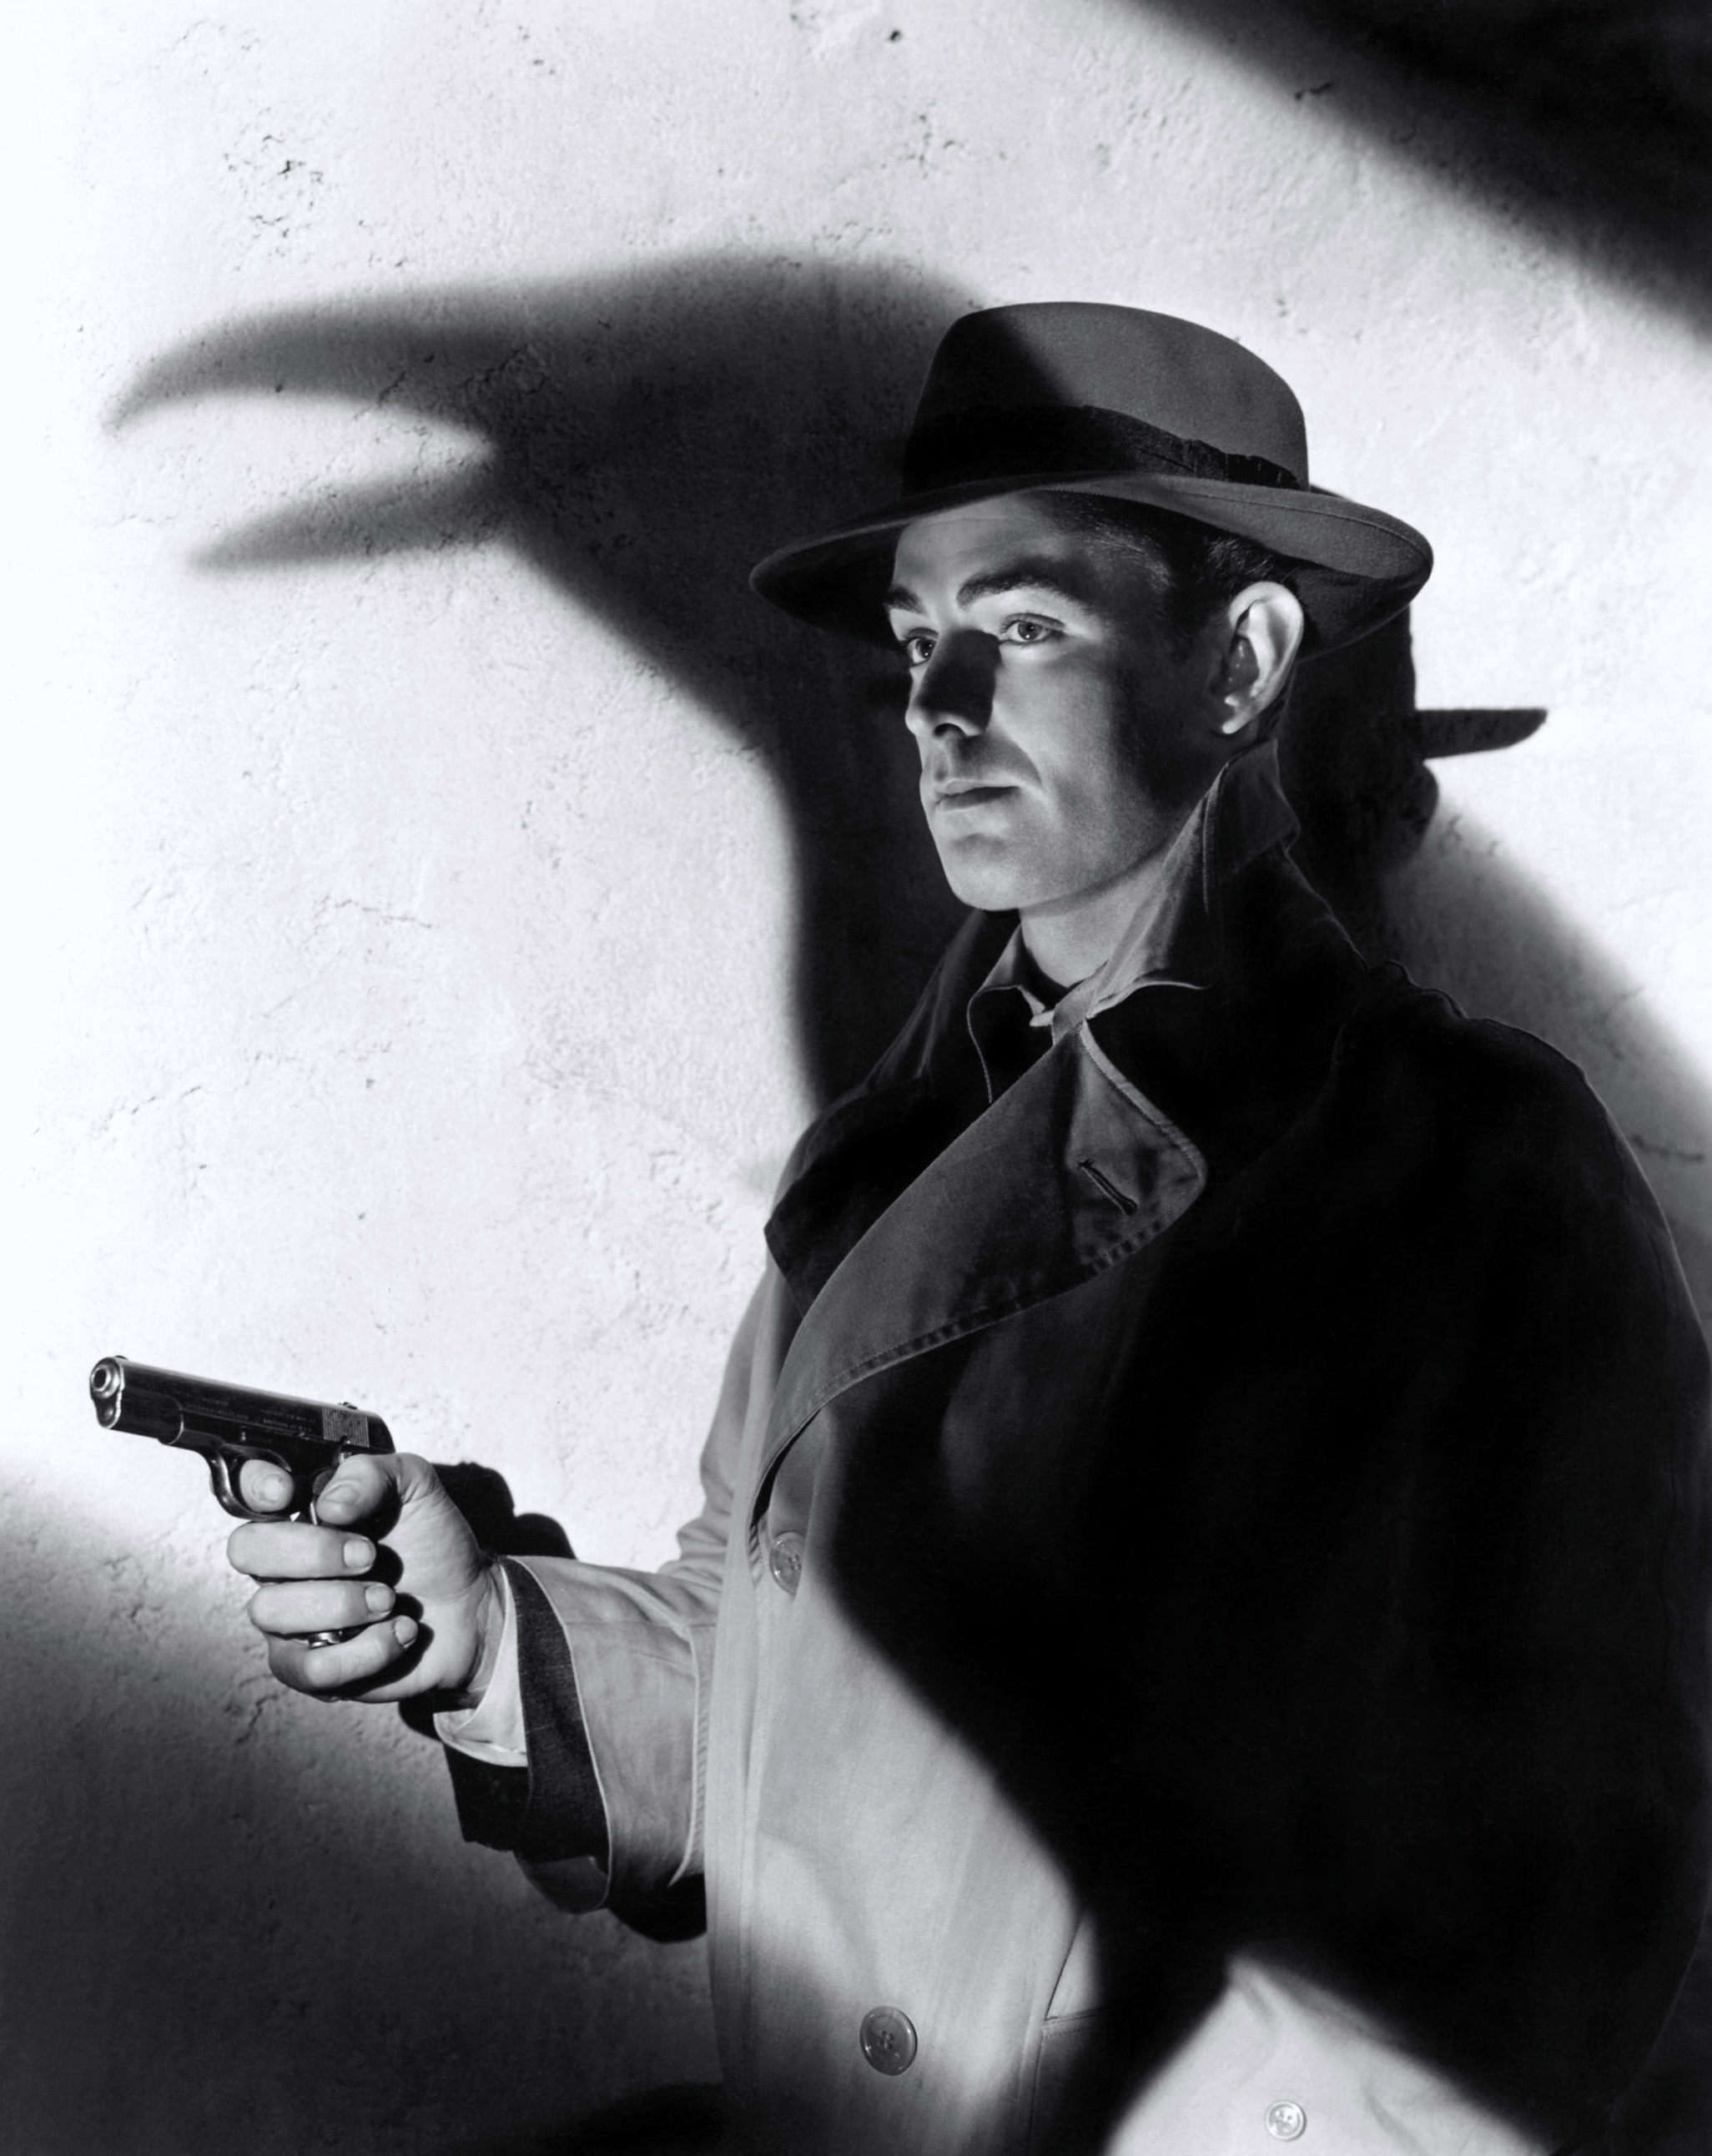 Noir movie. Нуар Киножанр. 1940s детектив Нуар.